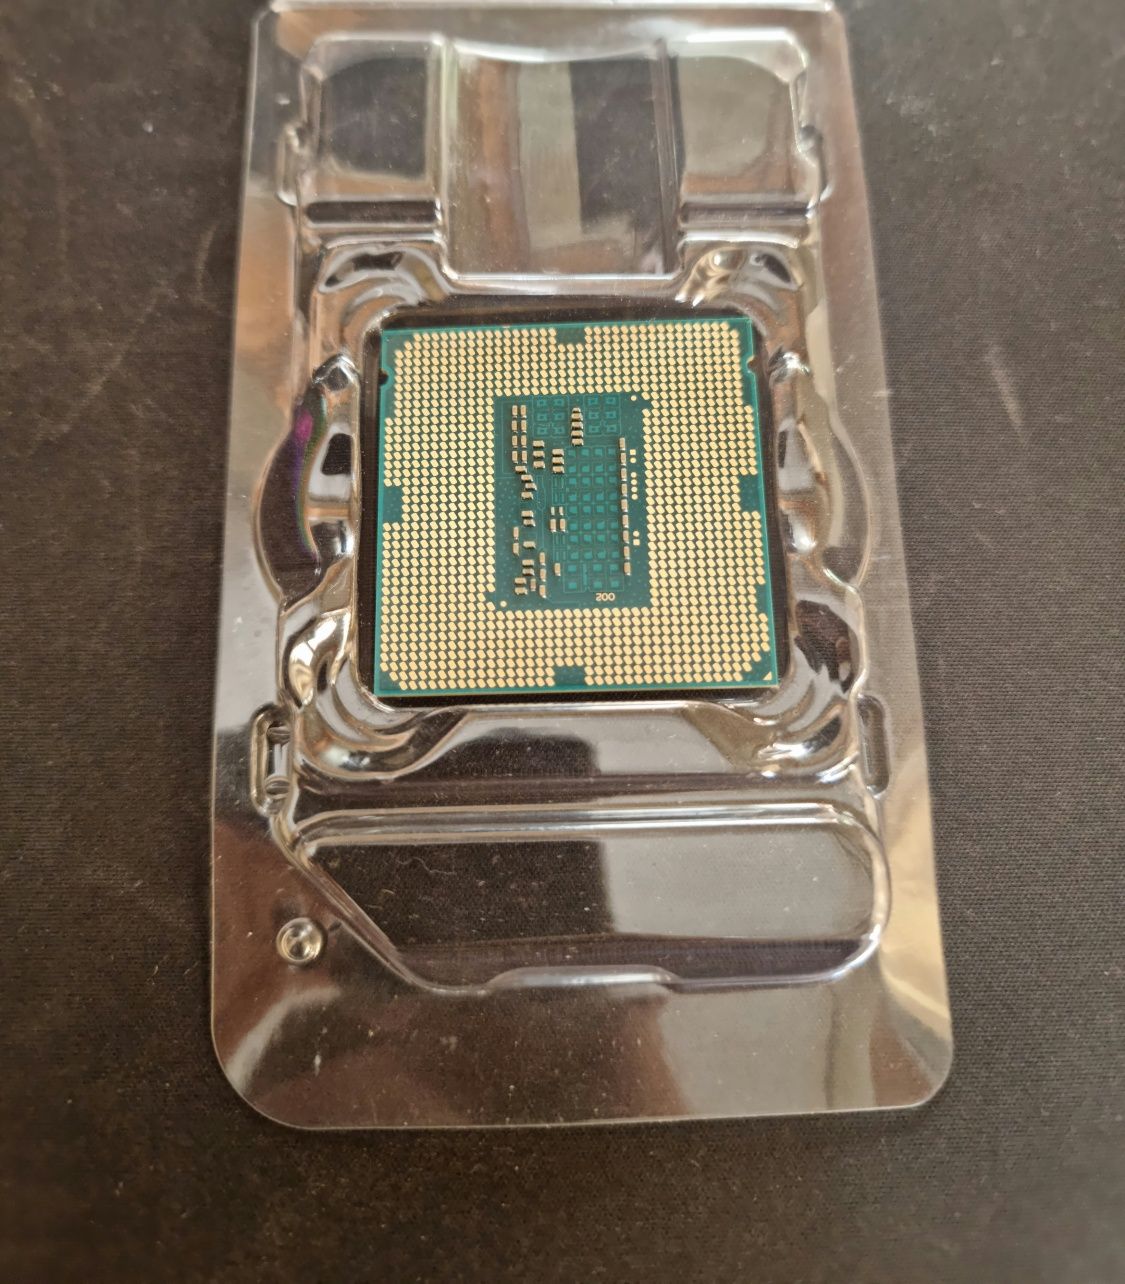 Intel Core i5-4670K 3.4Ghz Quad-Core